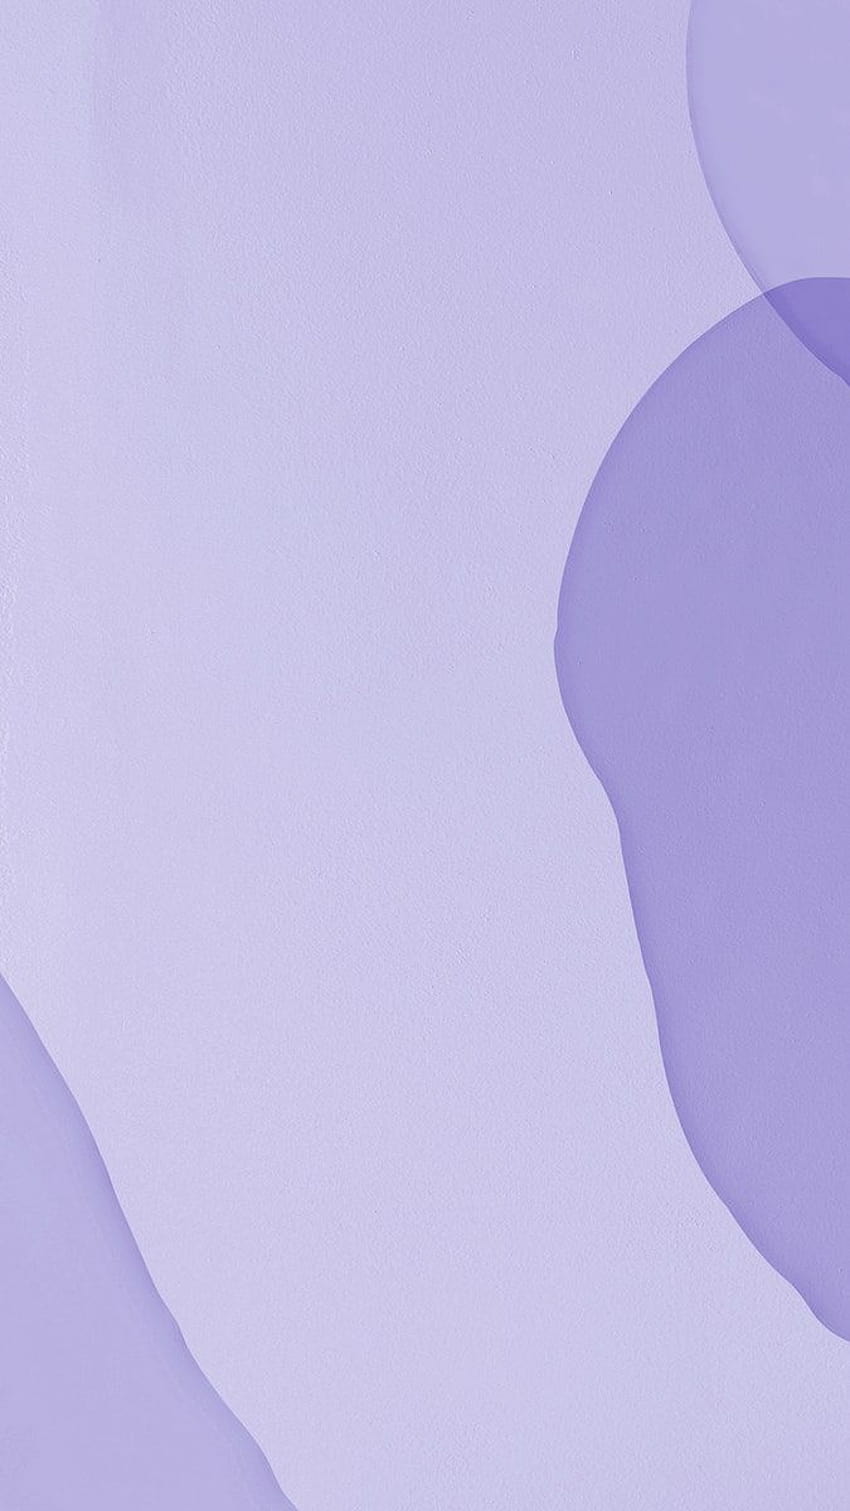 Latar belakang lilac tekstur cat air, iphone lilac wallpaper ponsel HD